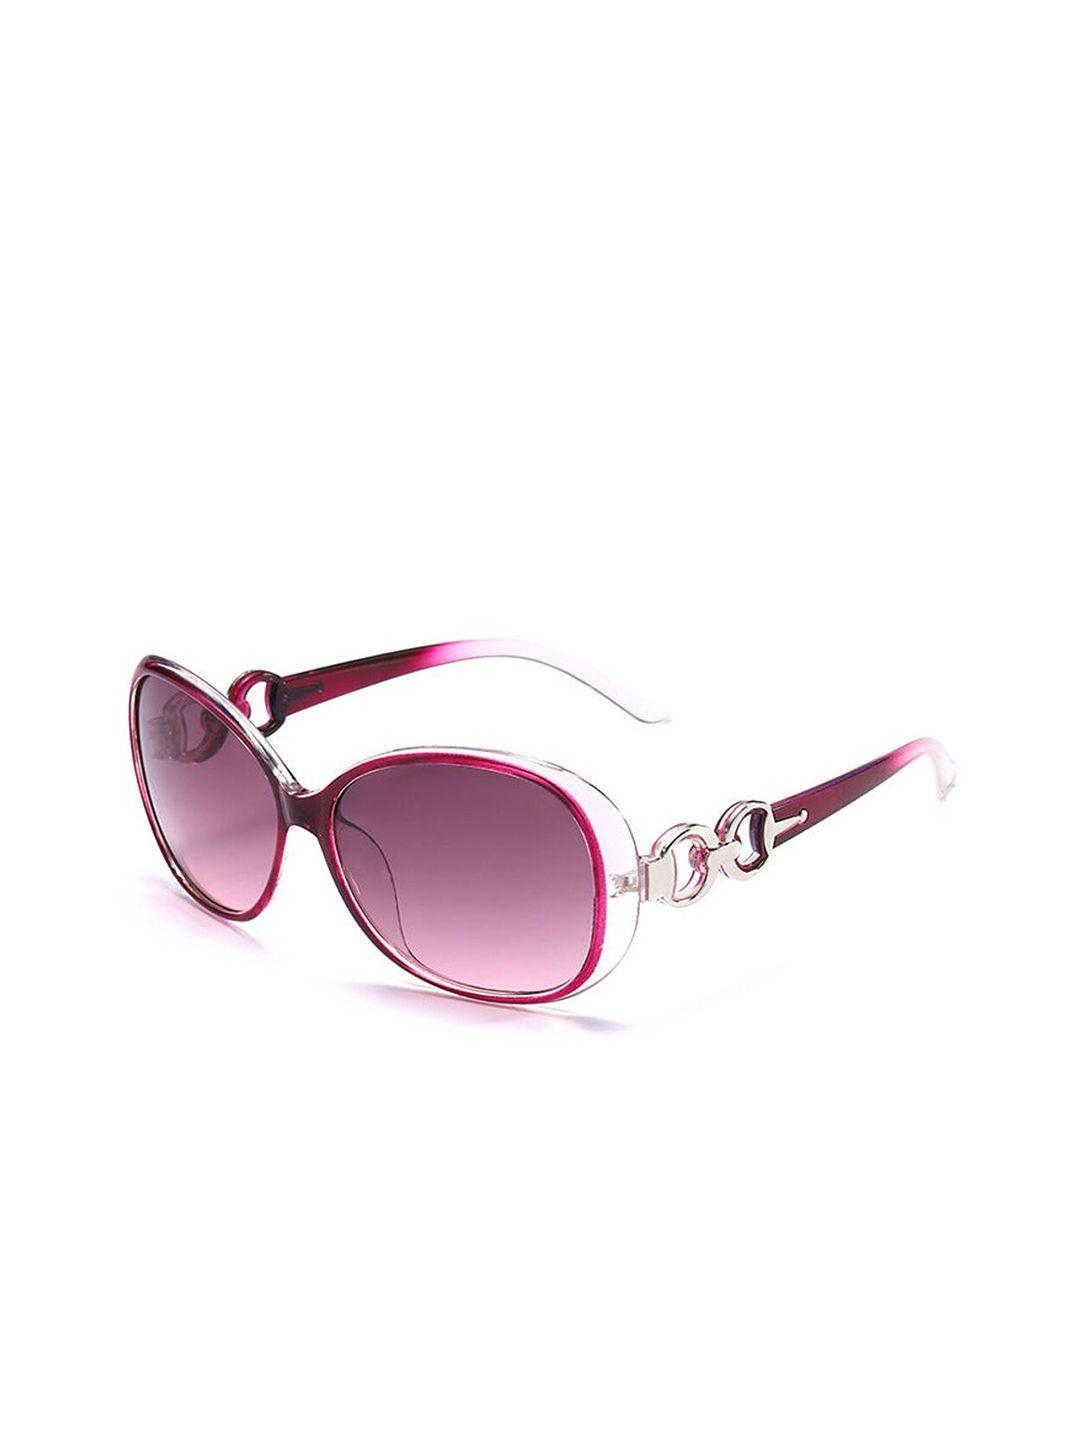 syga-women-oversized-sunglasses-with-uv-protected-lens-gl-224